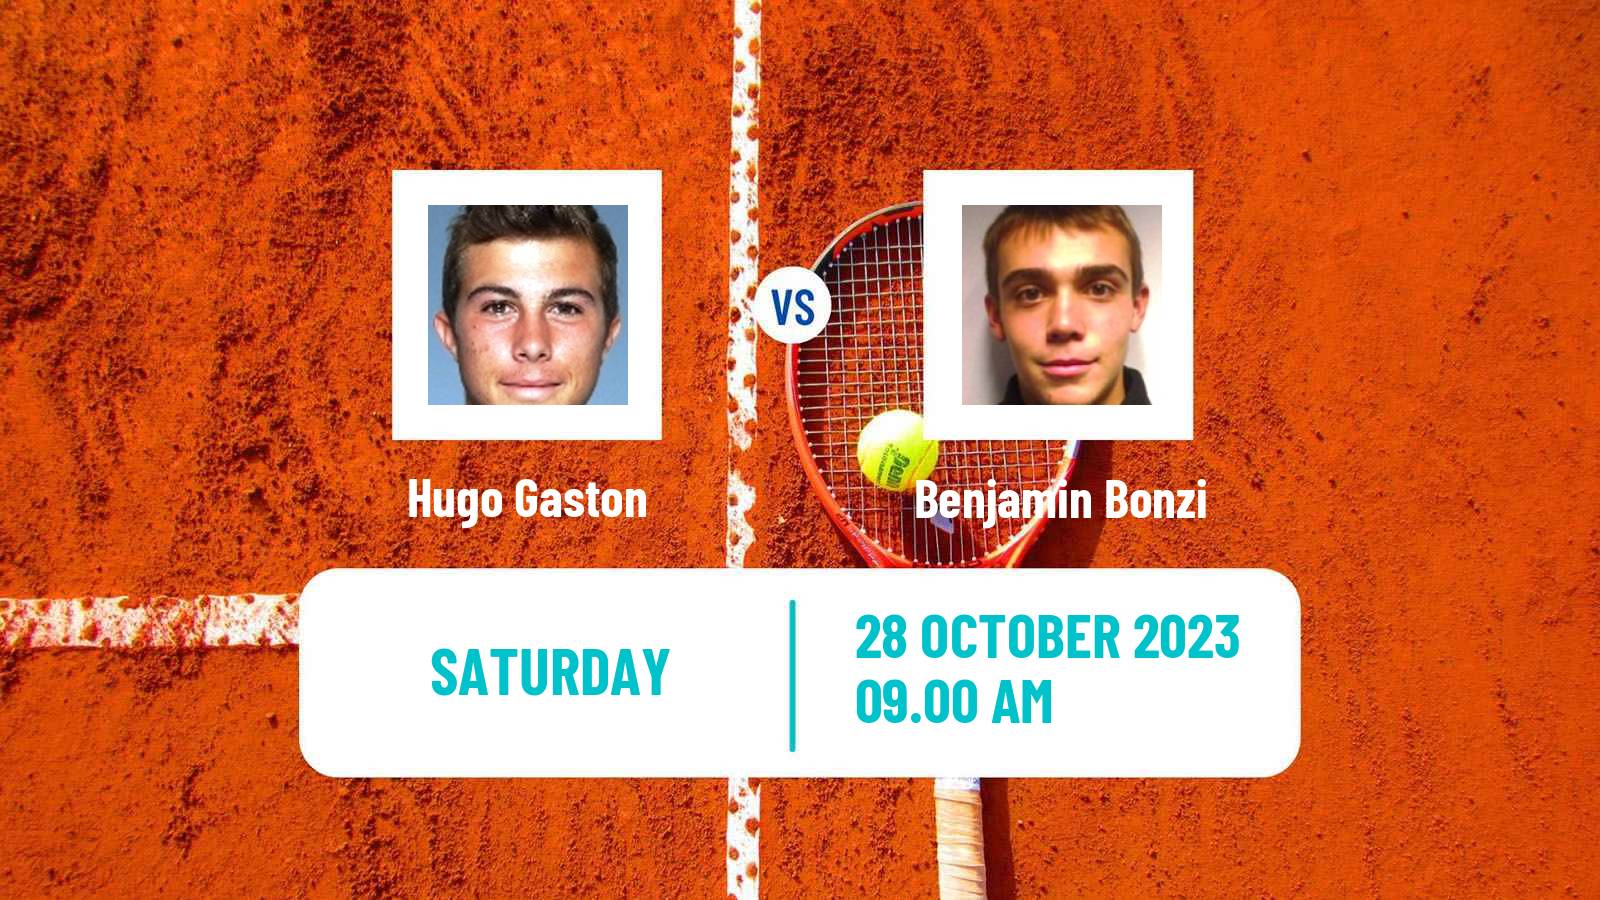 Tennis Brest Challenger Men Hugo Gaston - Benjamin Bonzi